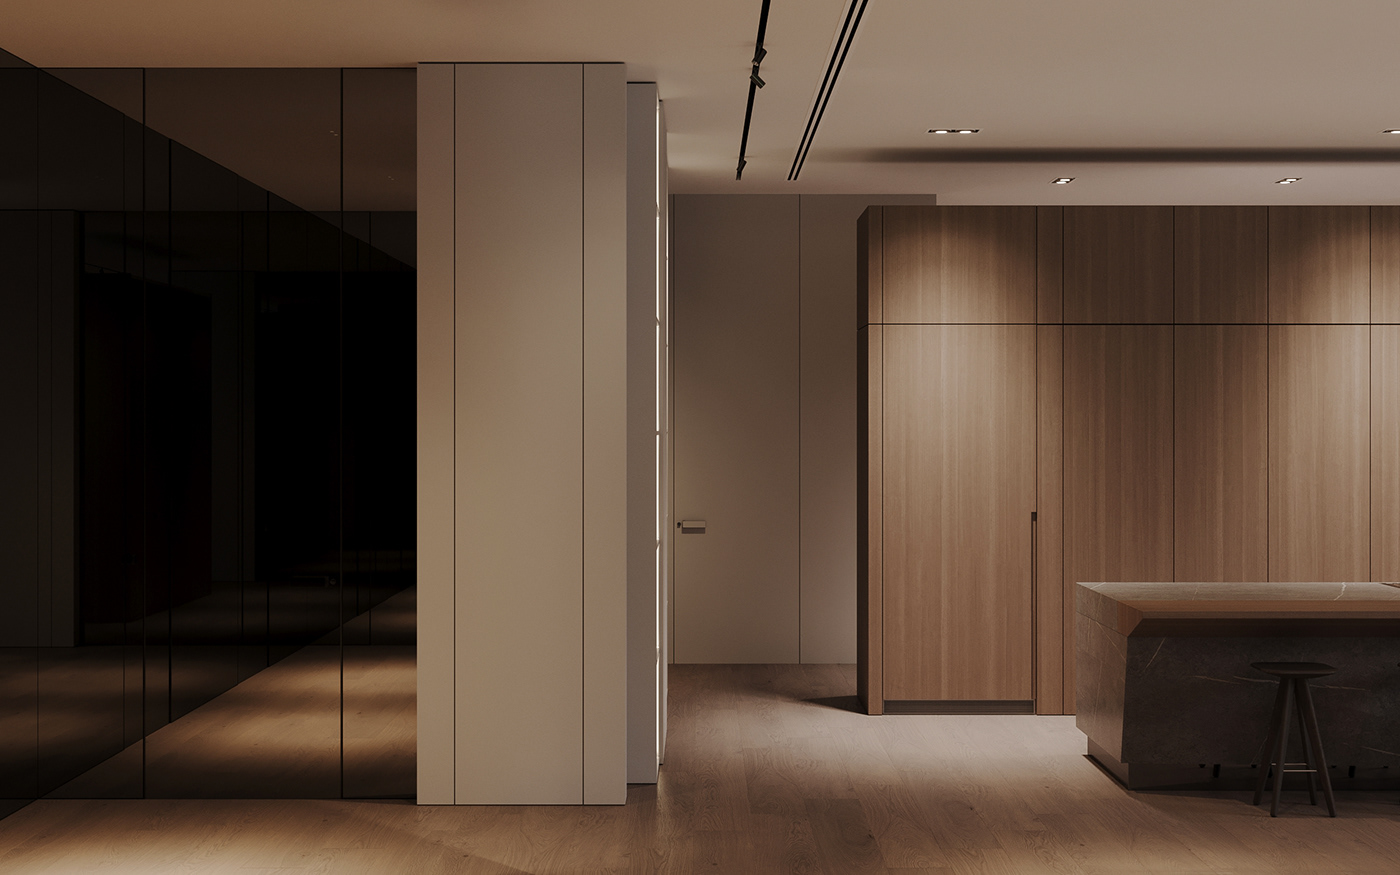 3dsmax corona render  design Interior interior design  living room гостиная   дизайн гостиной дизайн интерьера интерьер